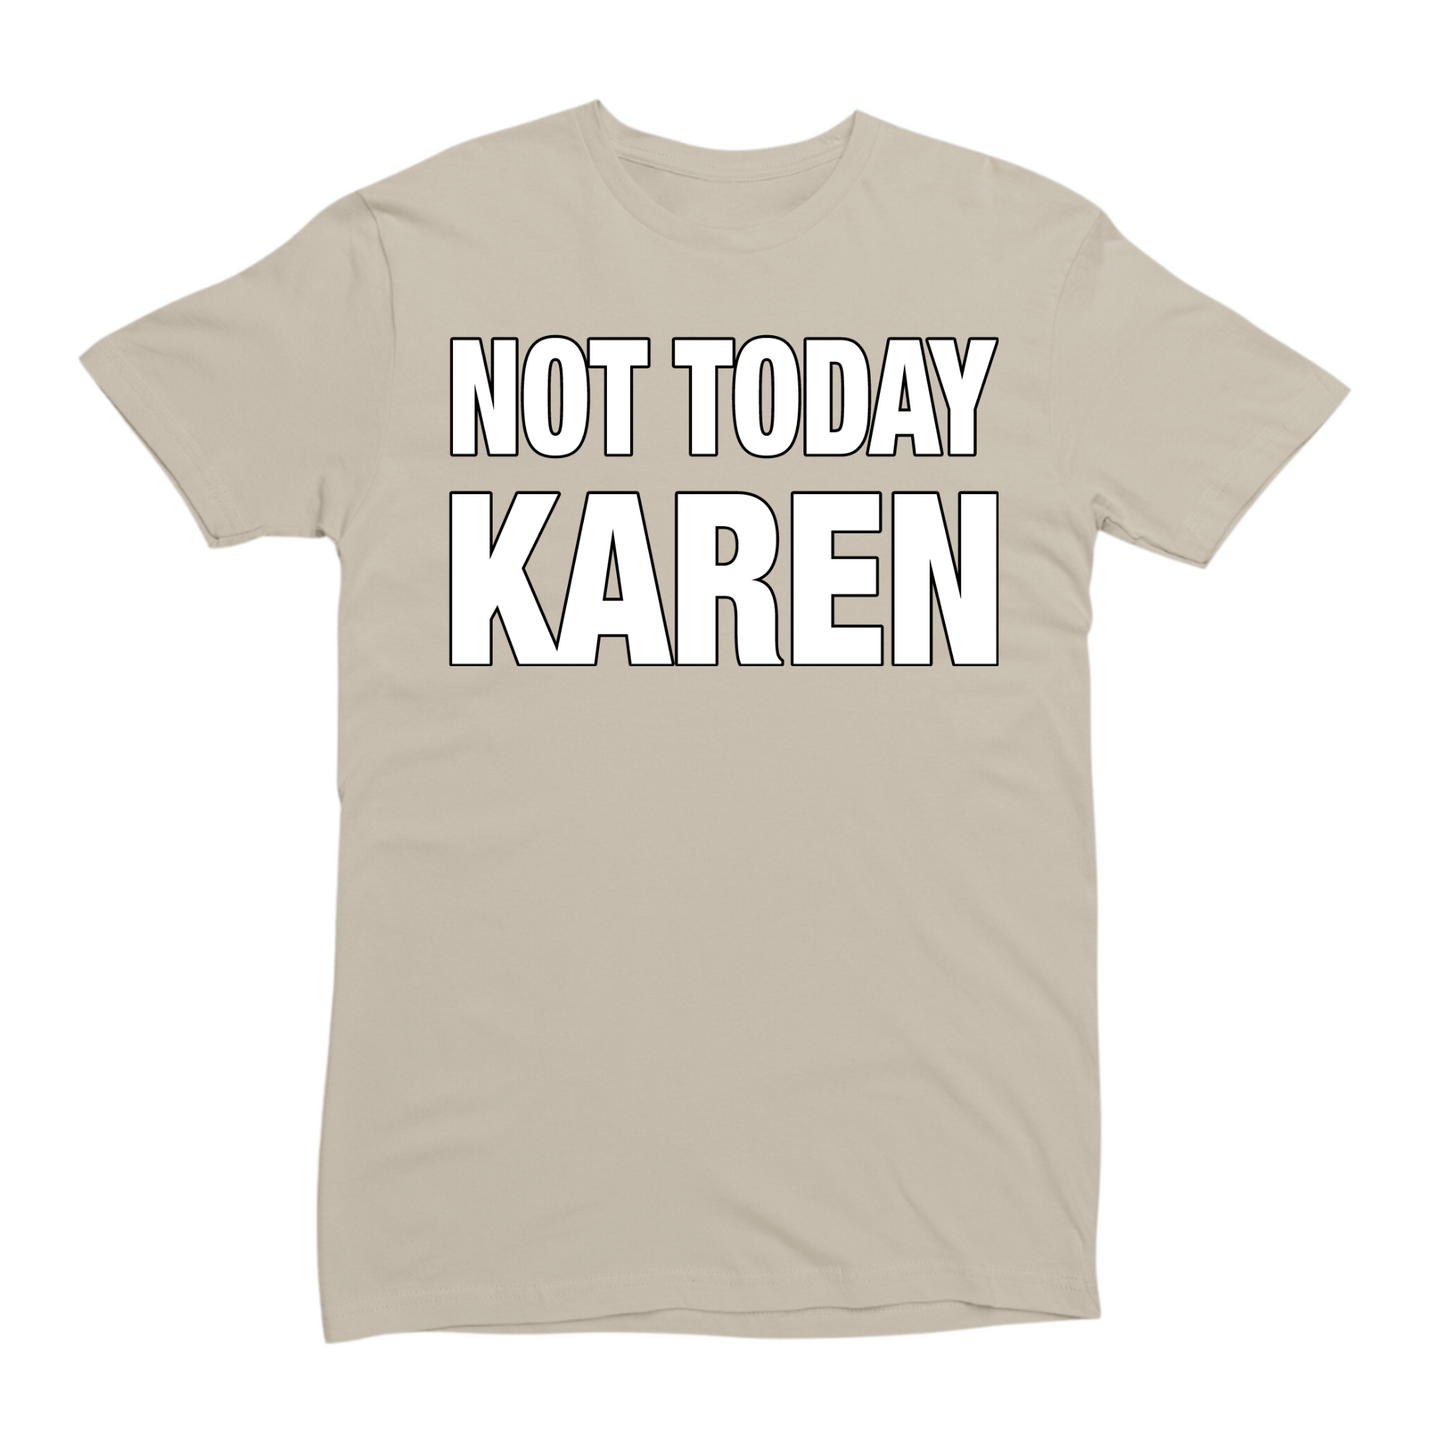 Not Today Karen T-shirt